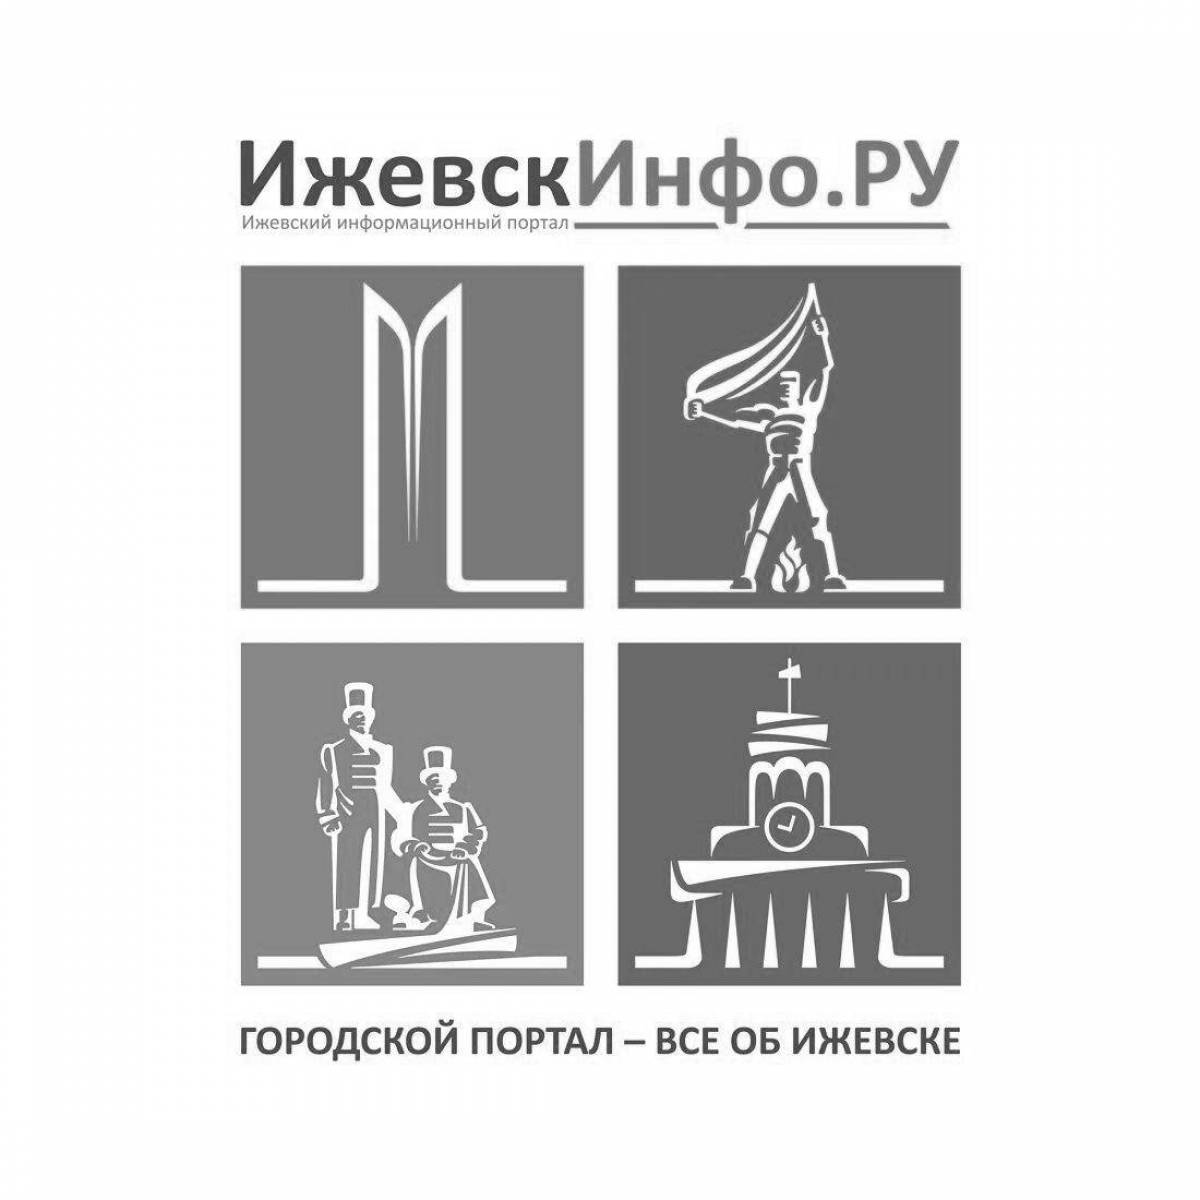 Coat of arms of Izhevsk #2